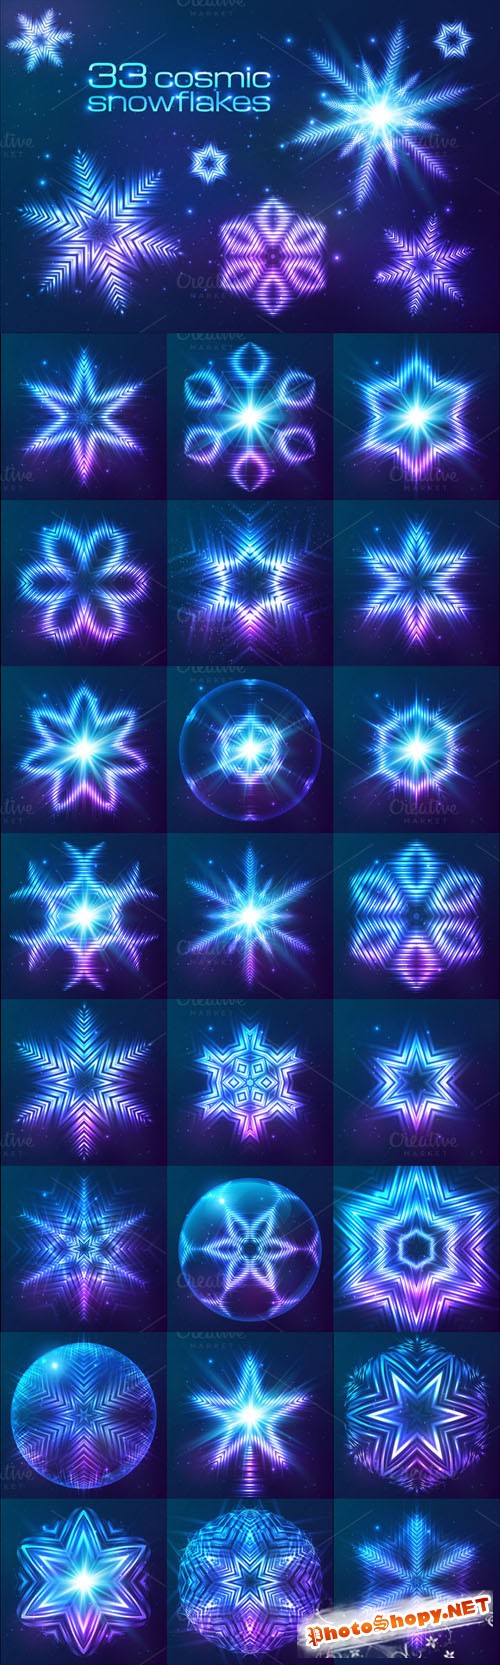 33 cosmic shining vector snowflakes - Creativemarket 100495